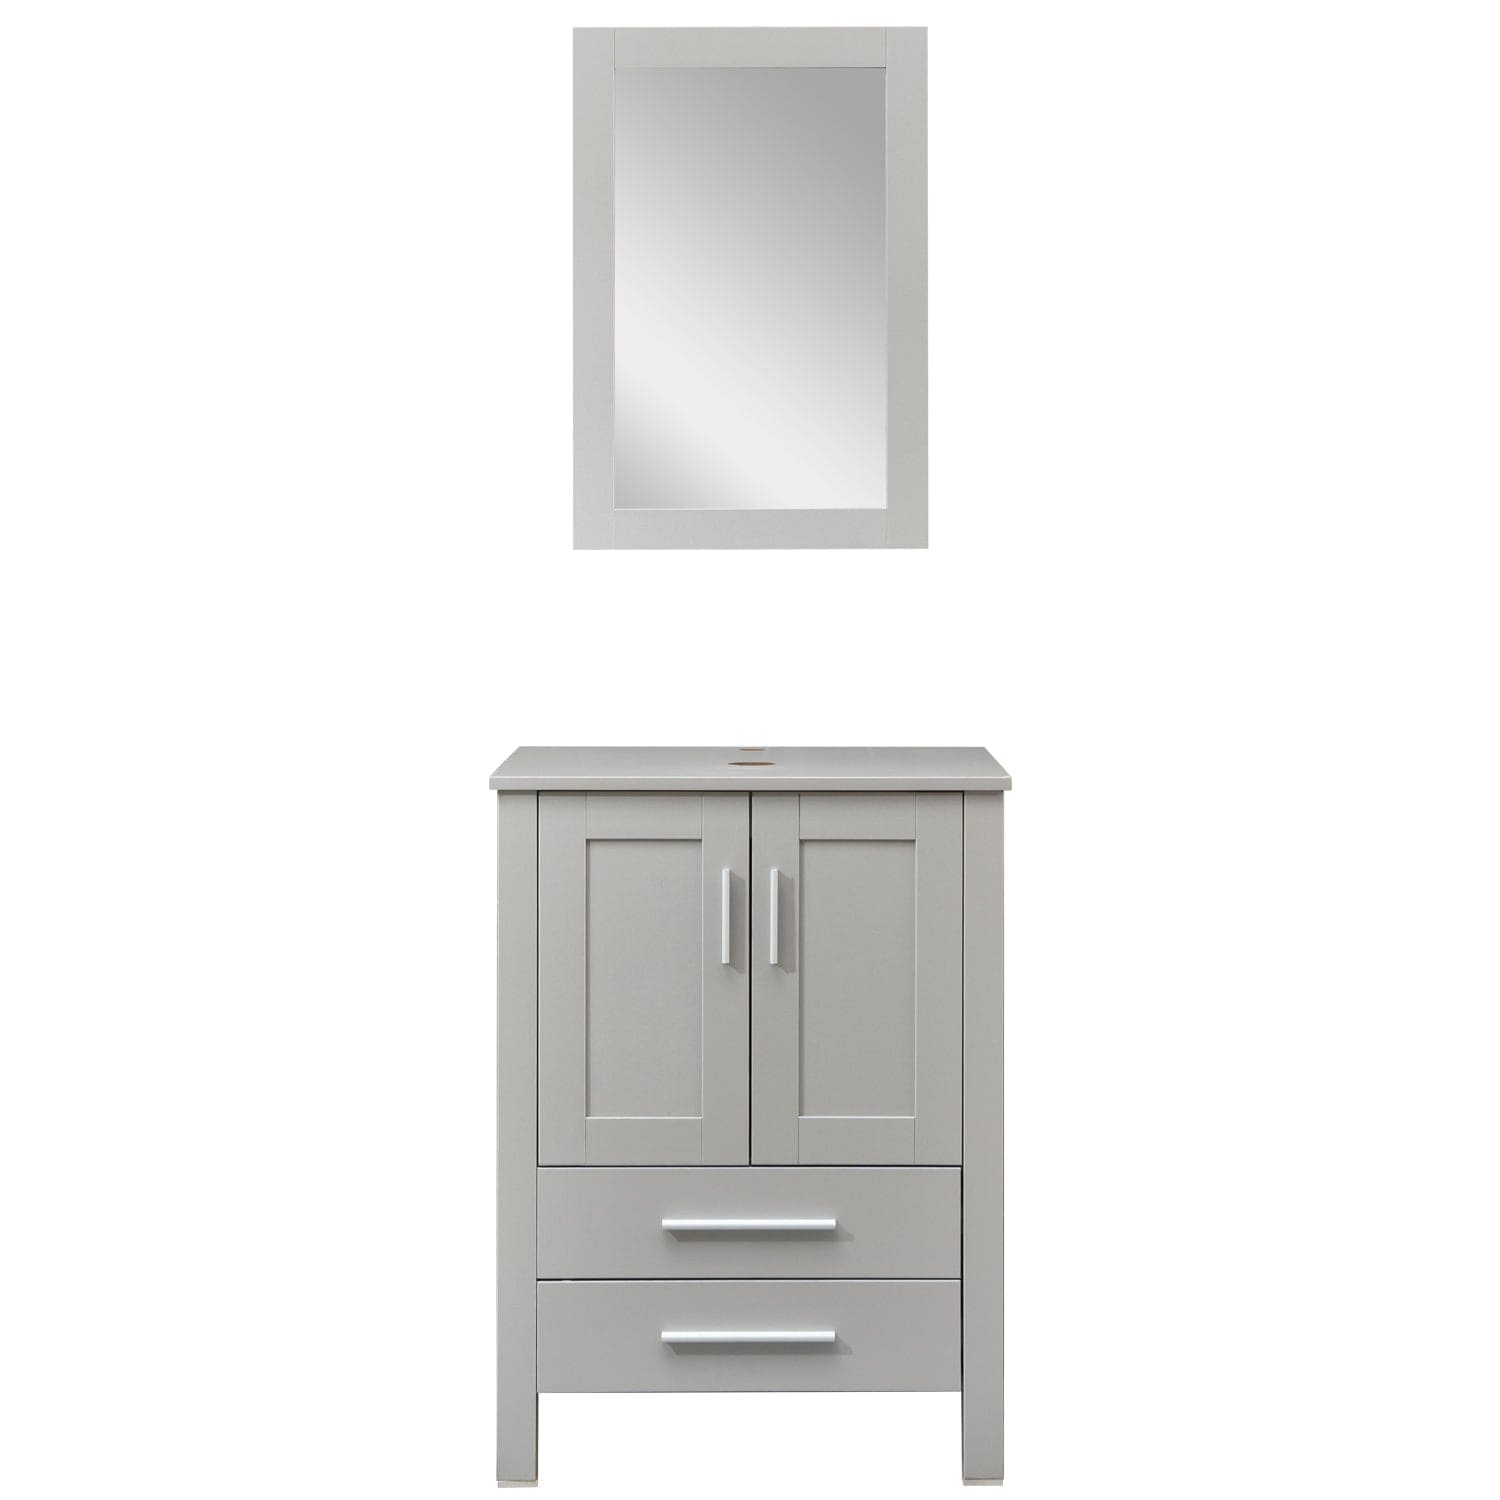 Elecwish 24-Inch Bathroom Vanity, Modern Wood Fixture Stand Pedestal Cabinet with Mirror, Grey